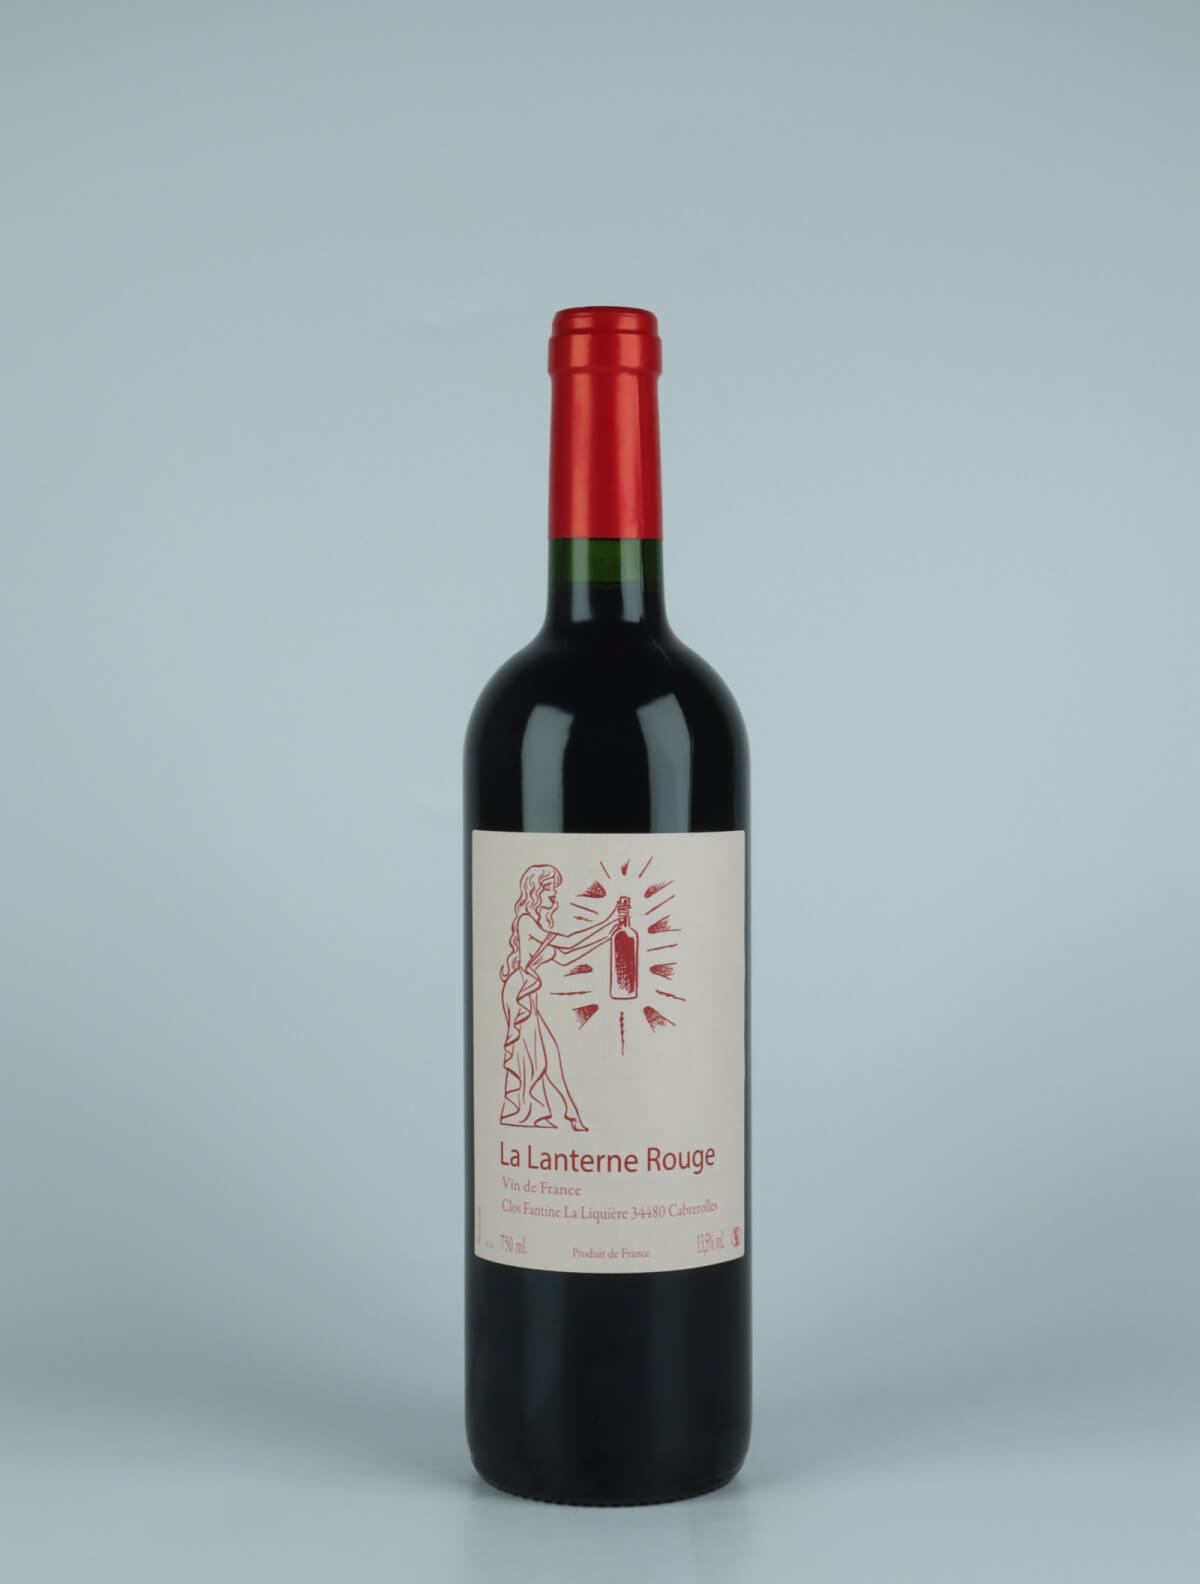 A bottle 2021 La Lanterne Rouge Red wine from Clos Fantine, Languedoc in France